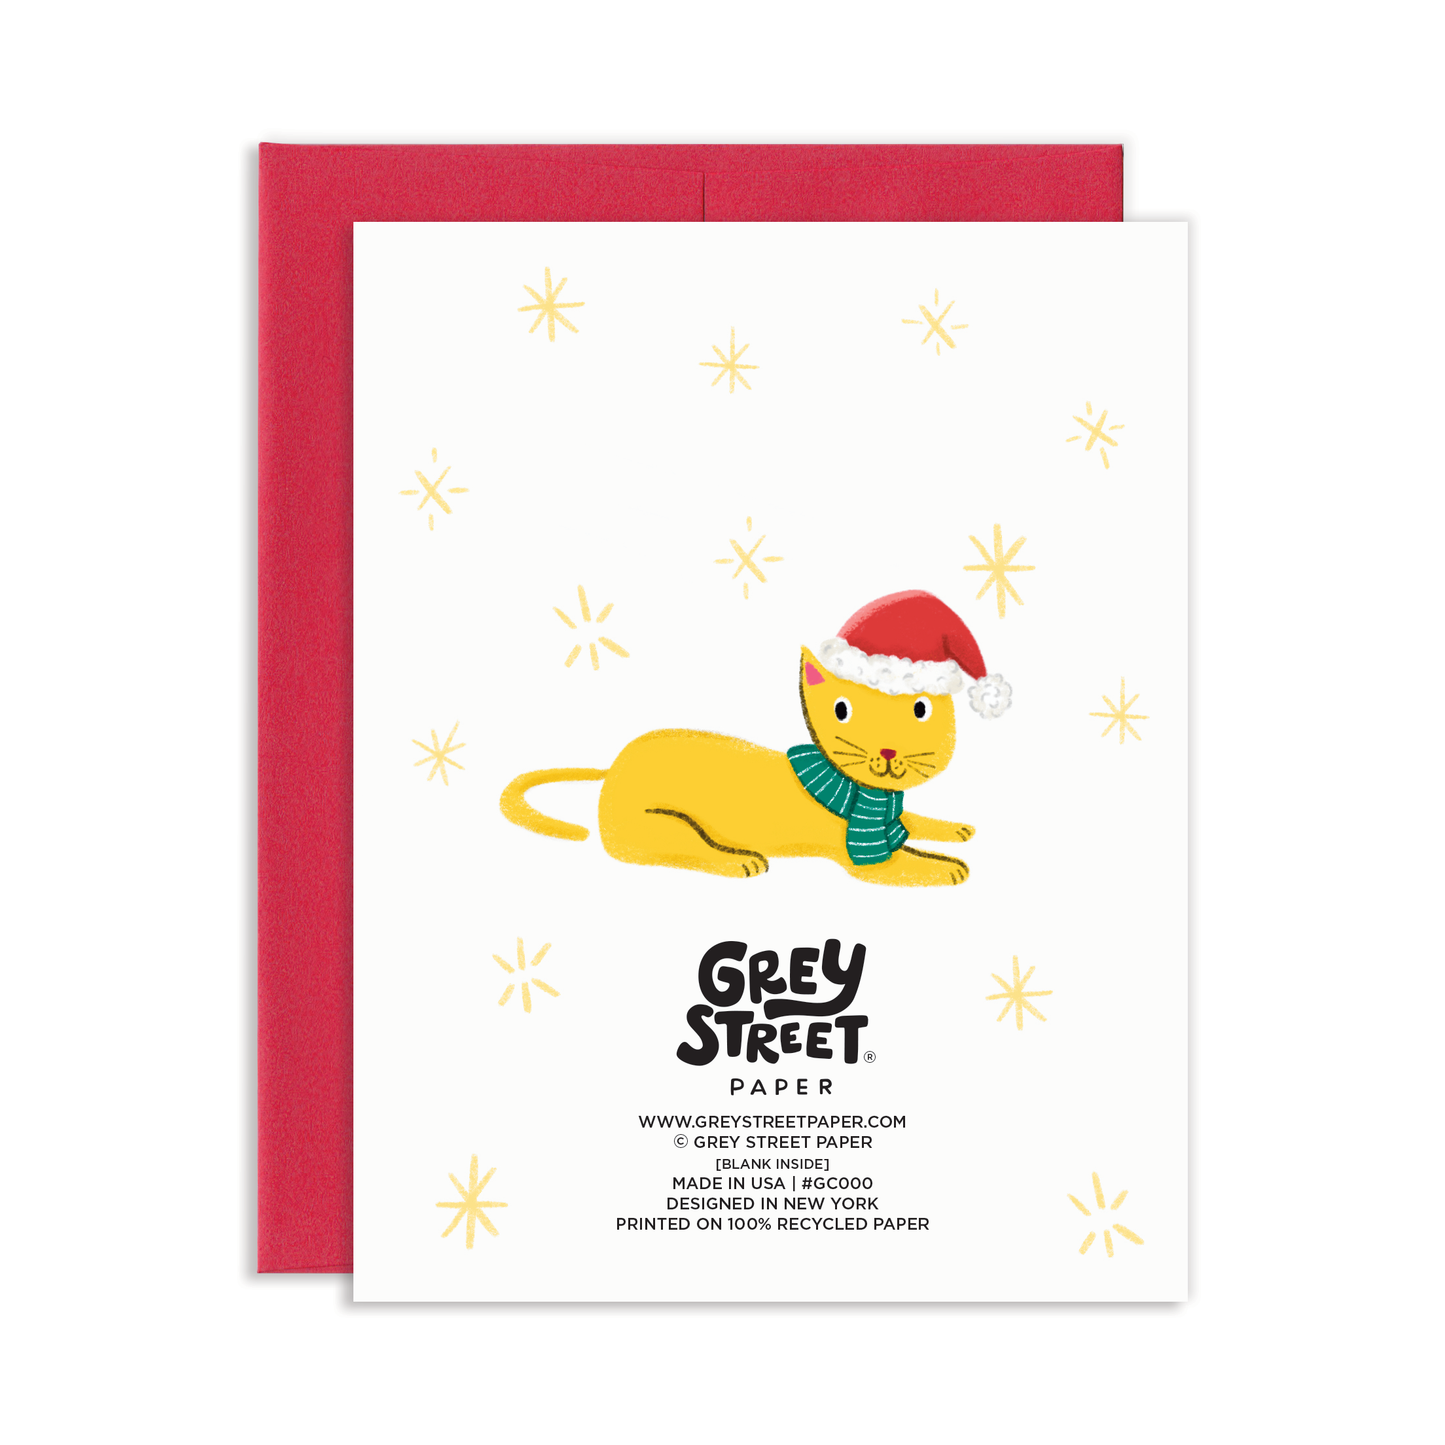 Meowy Christmas Cat Greeting Card